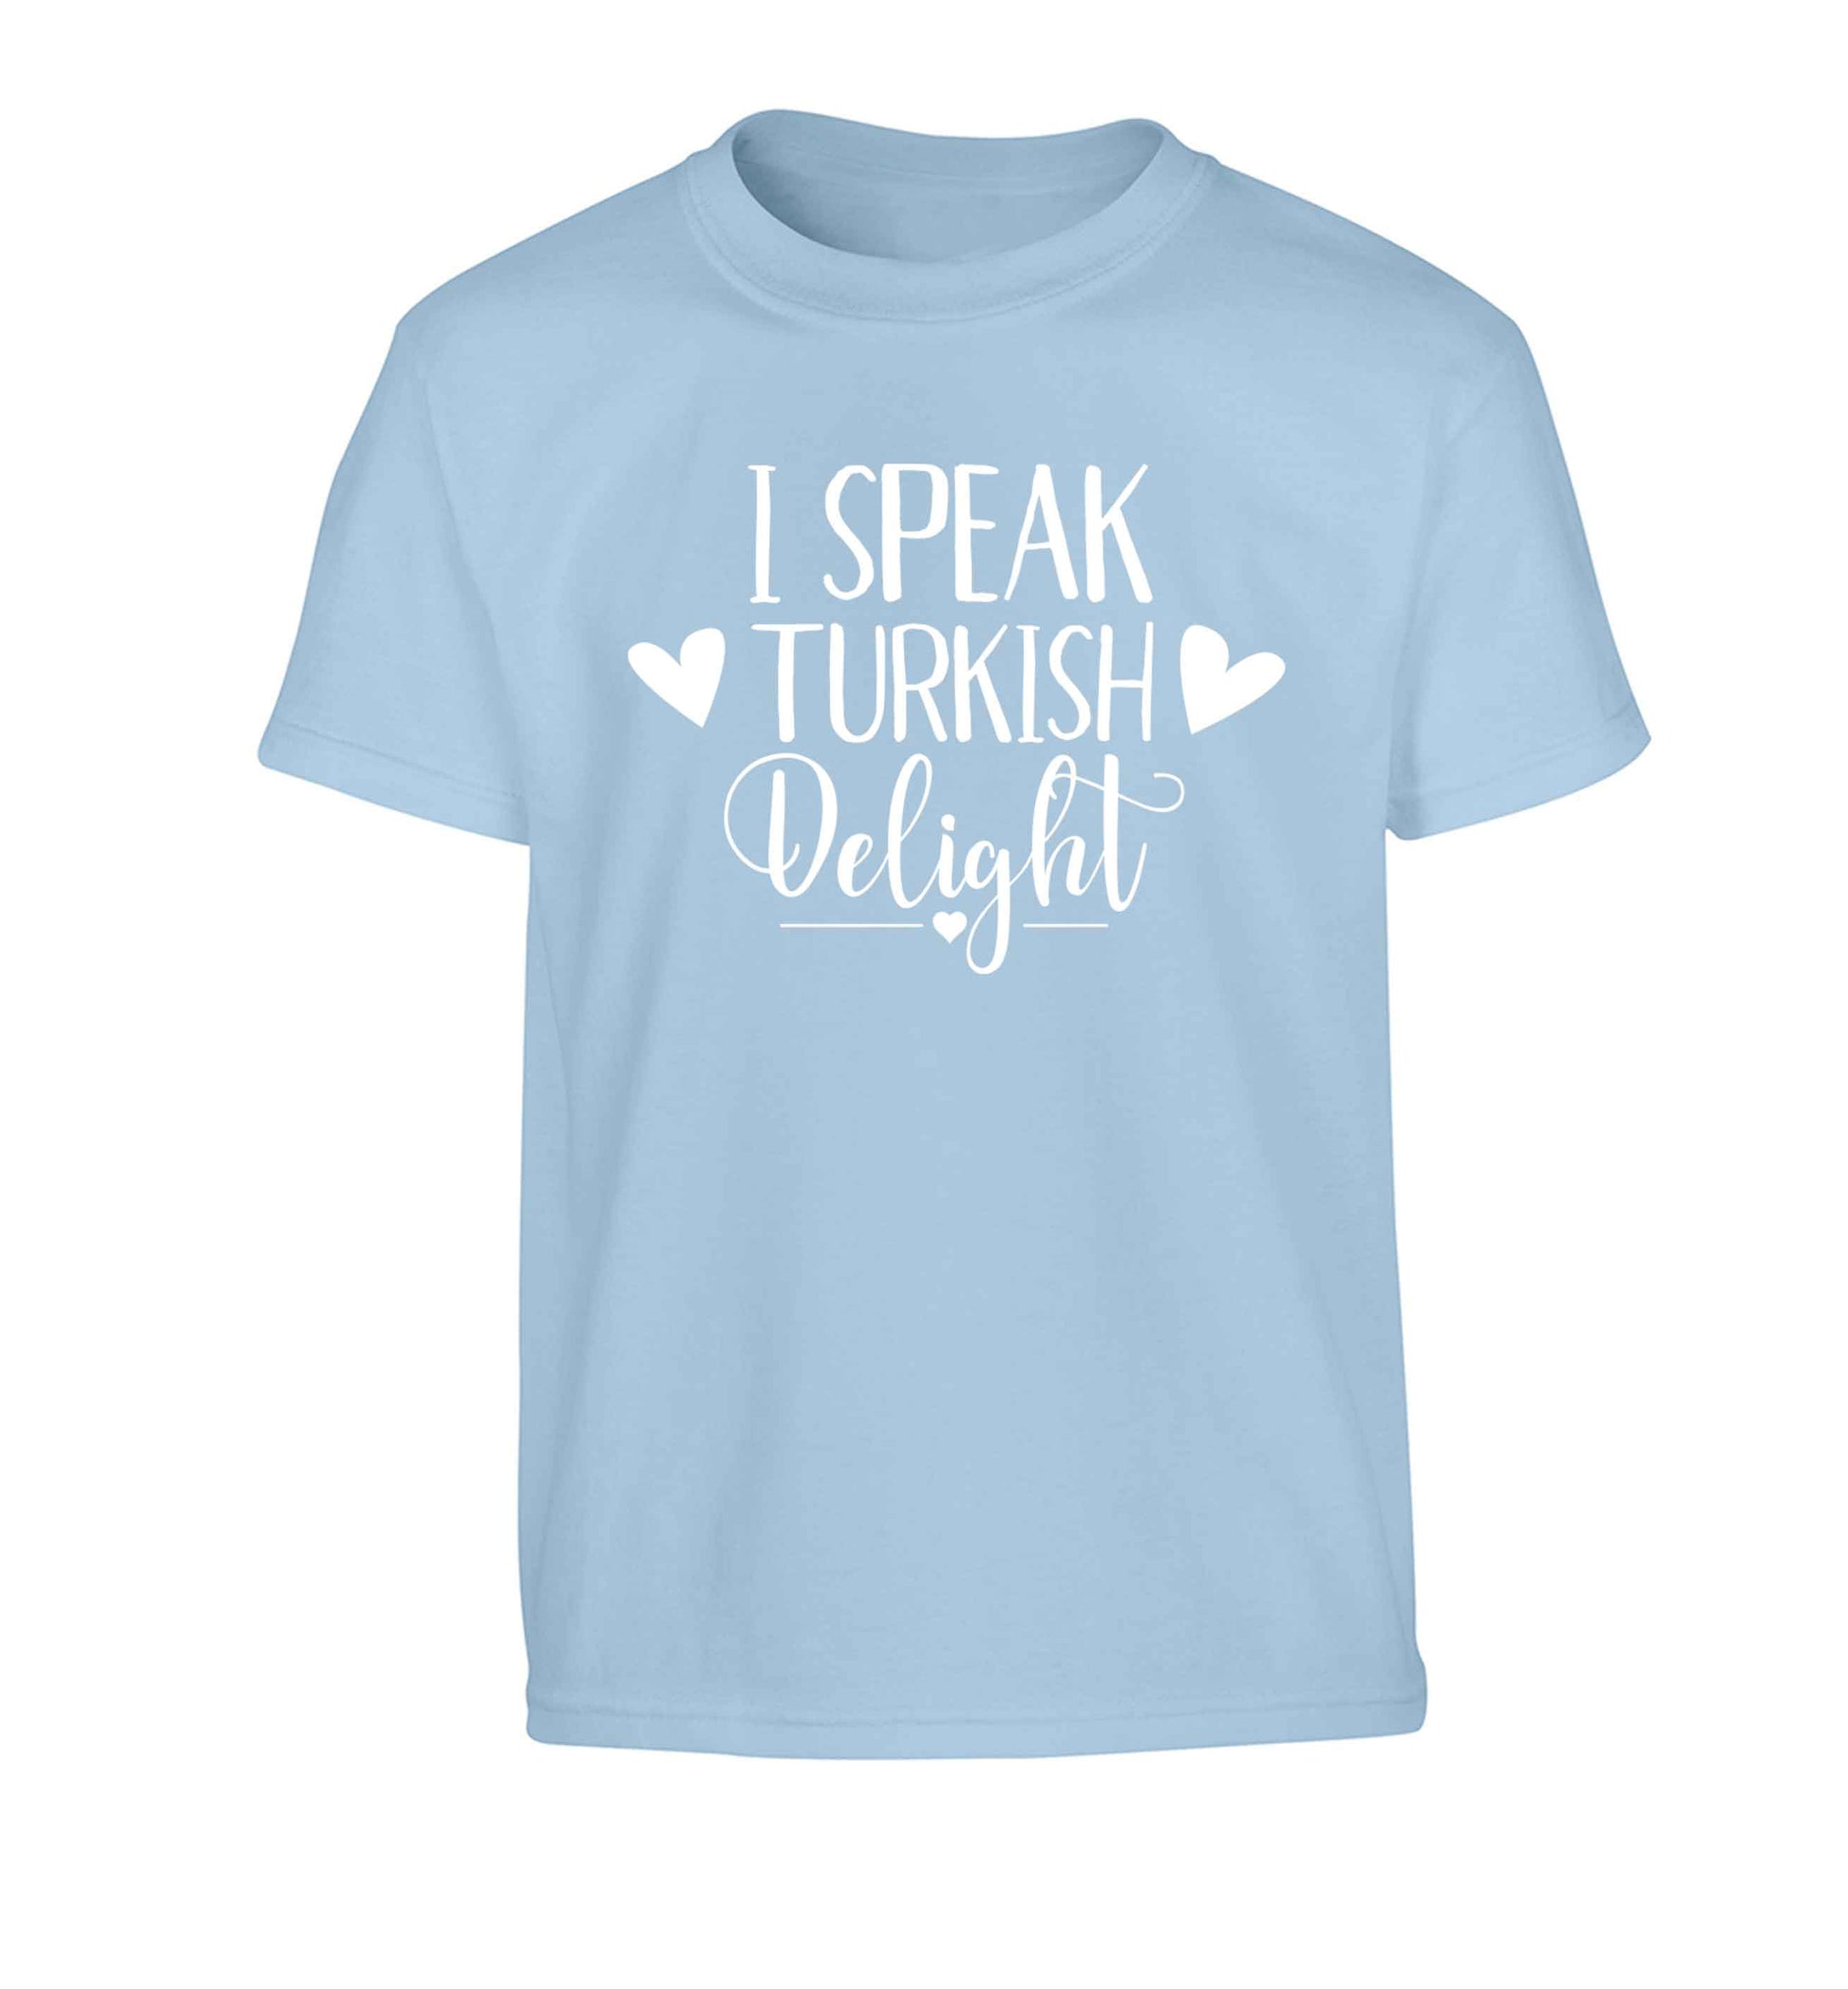 I speak turkish...delight Children's light blue Tshirt 12-13 Years